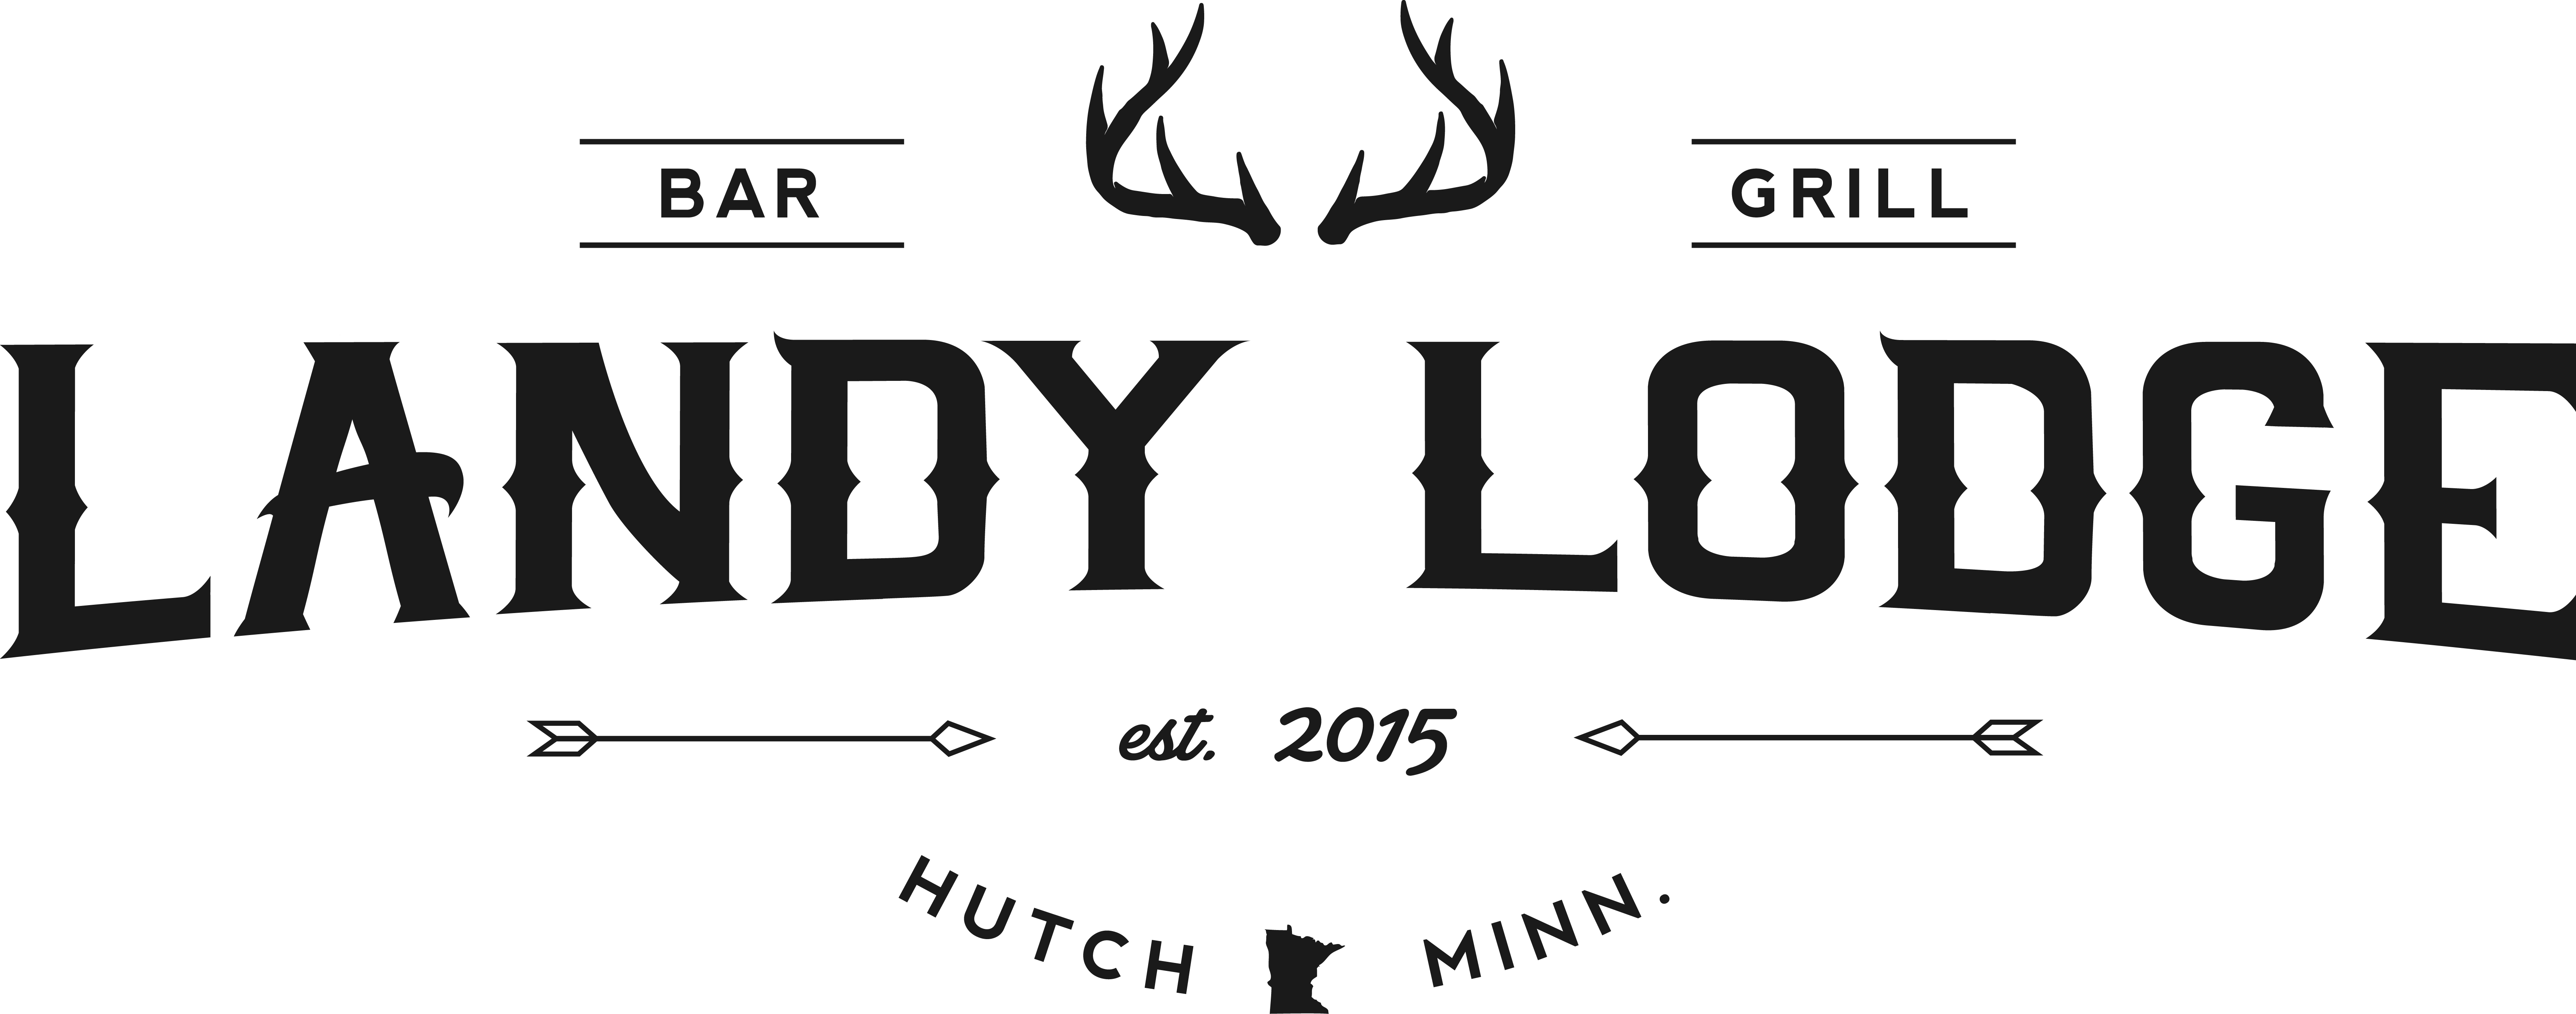 Landy Lodge Bar & Grill business logo